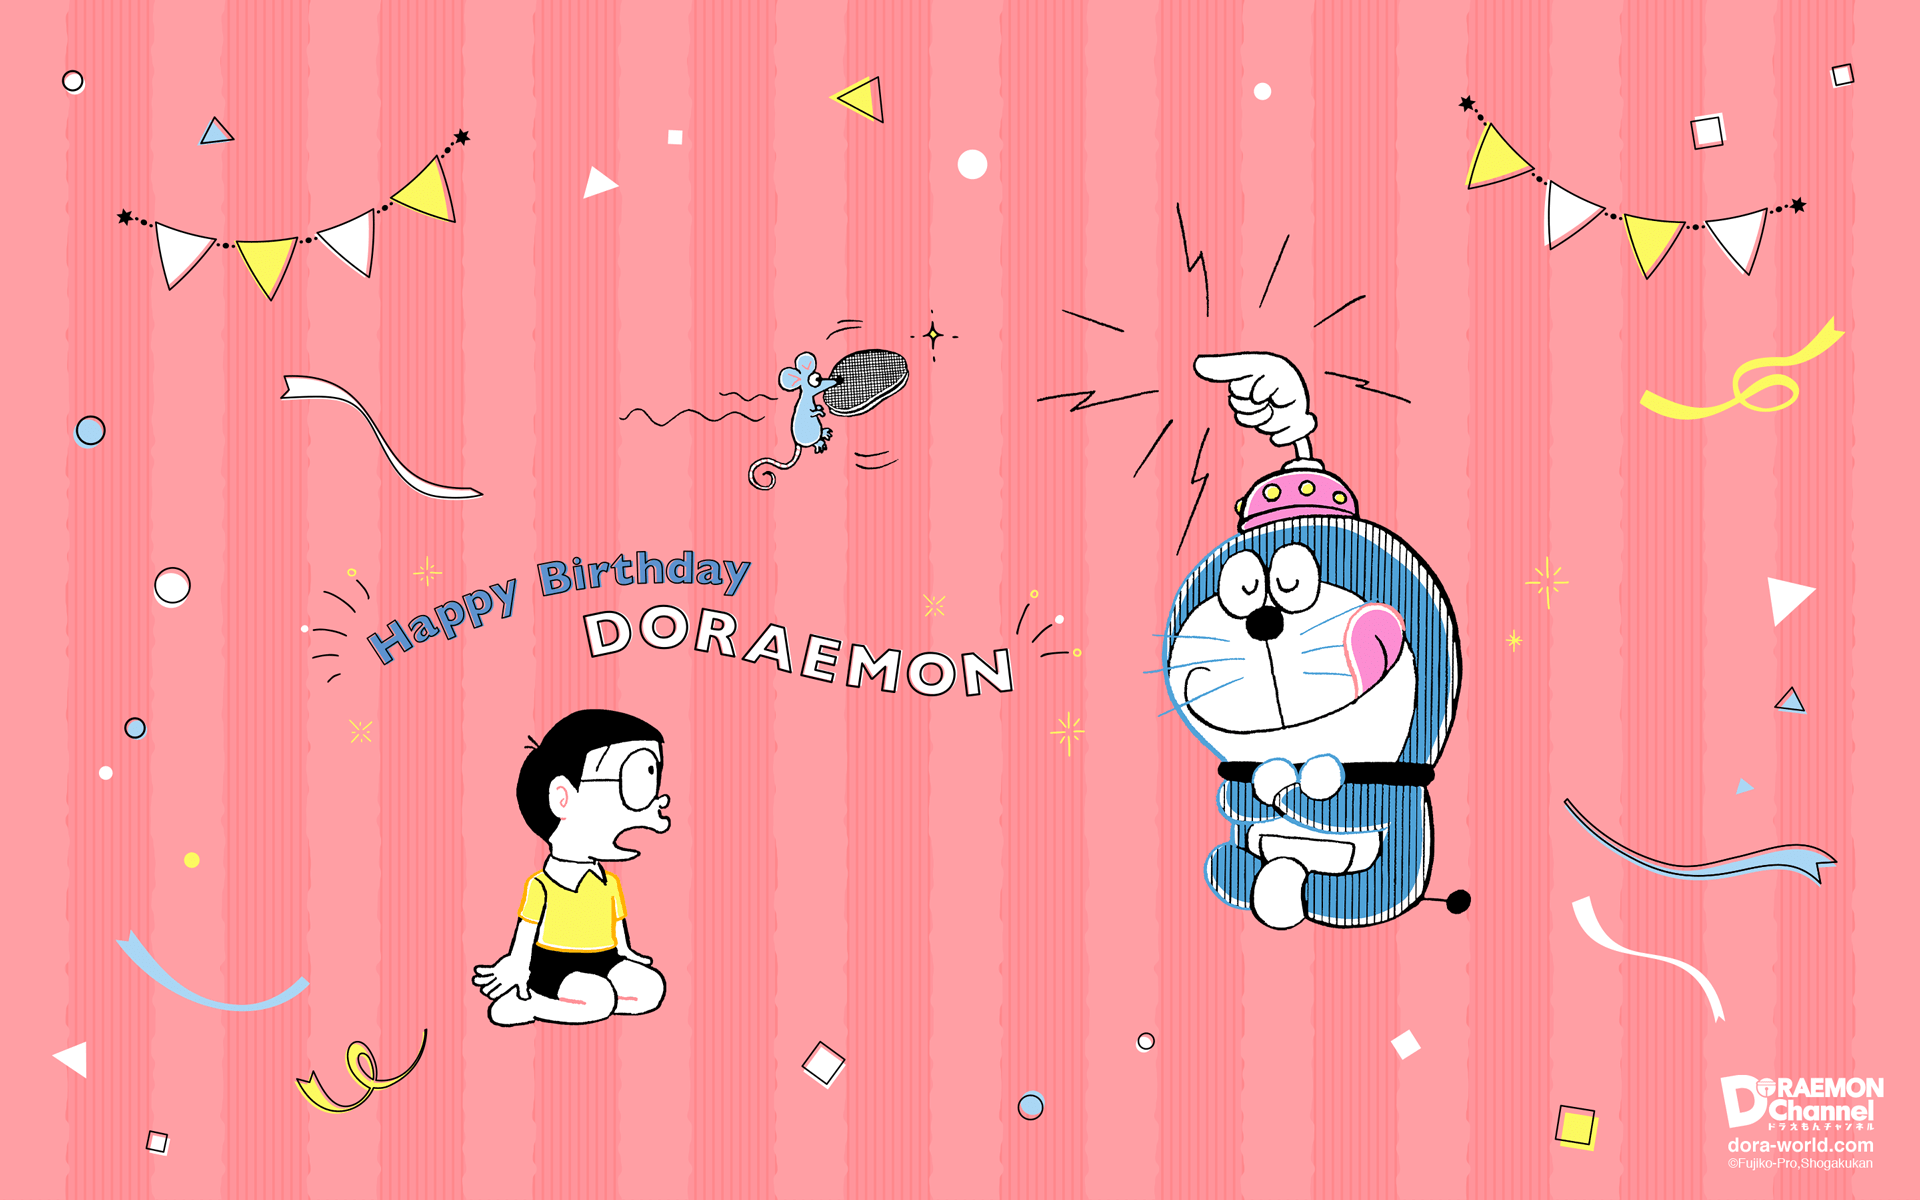 Doraemon Birthday Special 2021